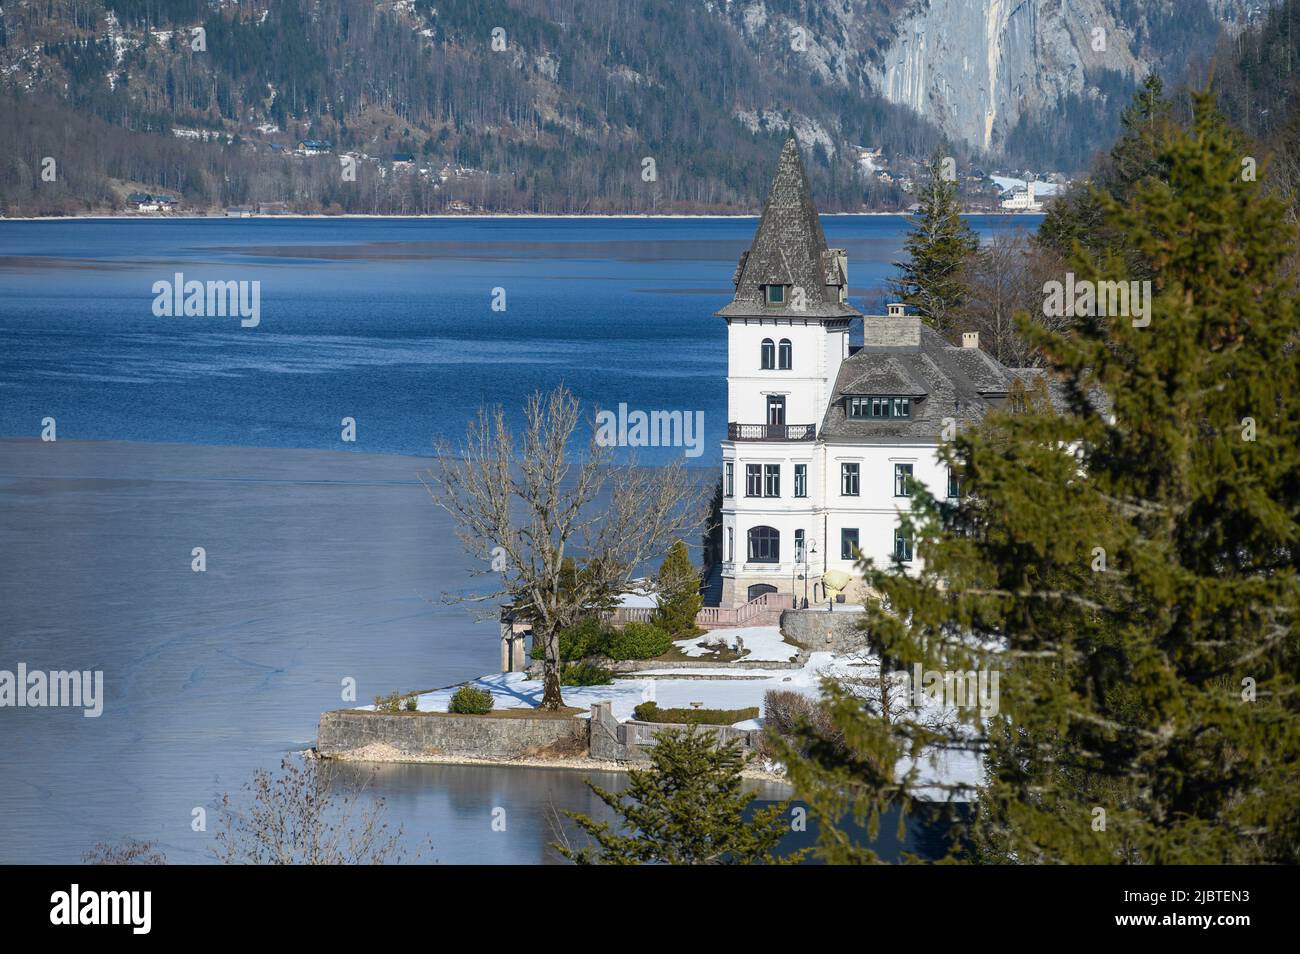 Austria, Ausseerland region, Grundlsee lake Stock Photo